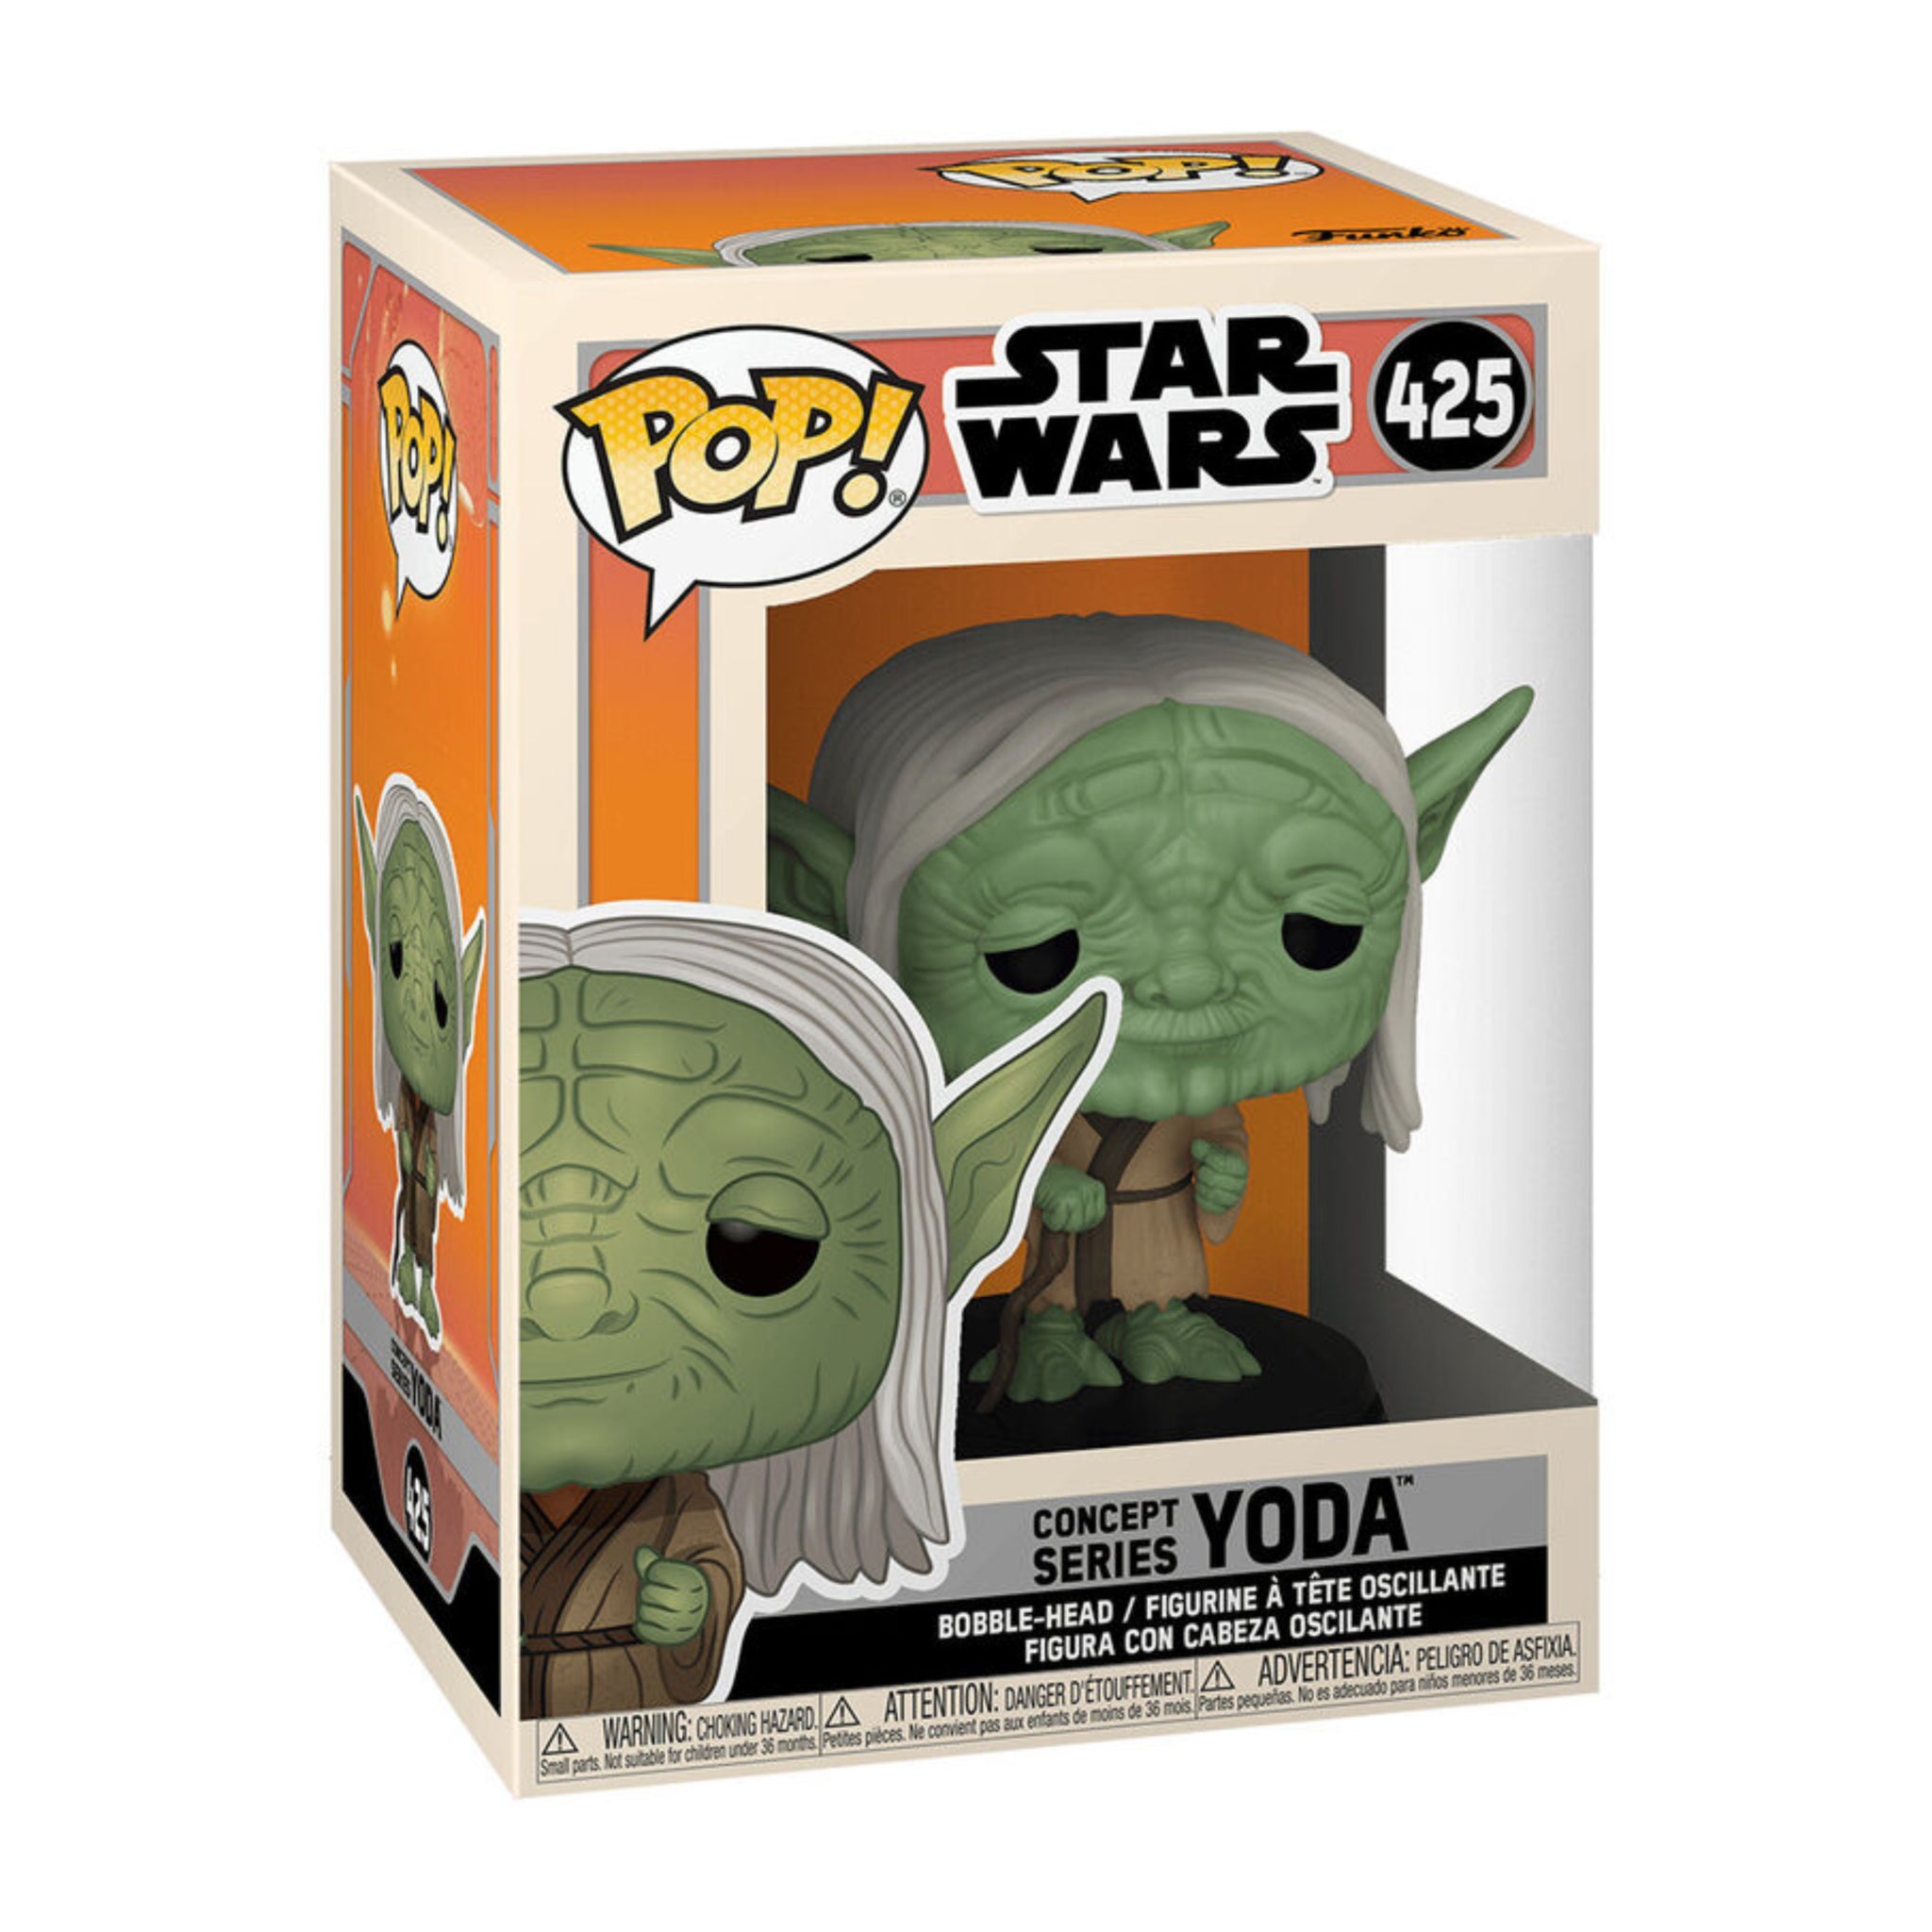 Concept Series Yoda Funko Pop!